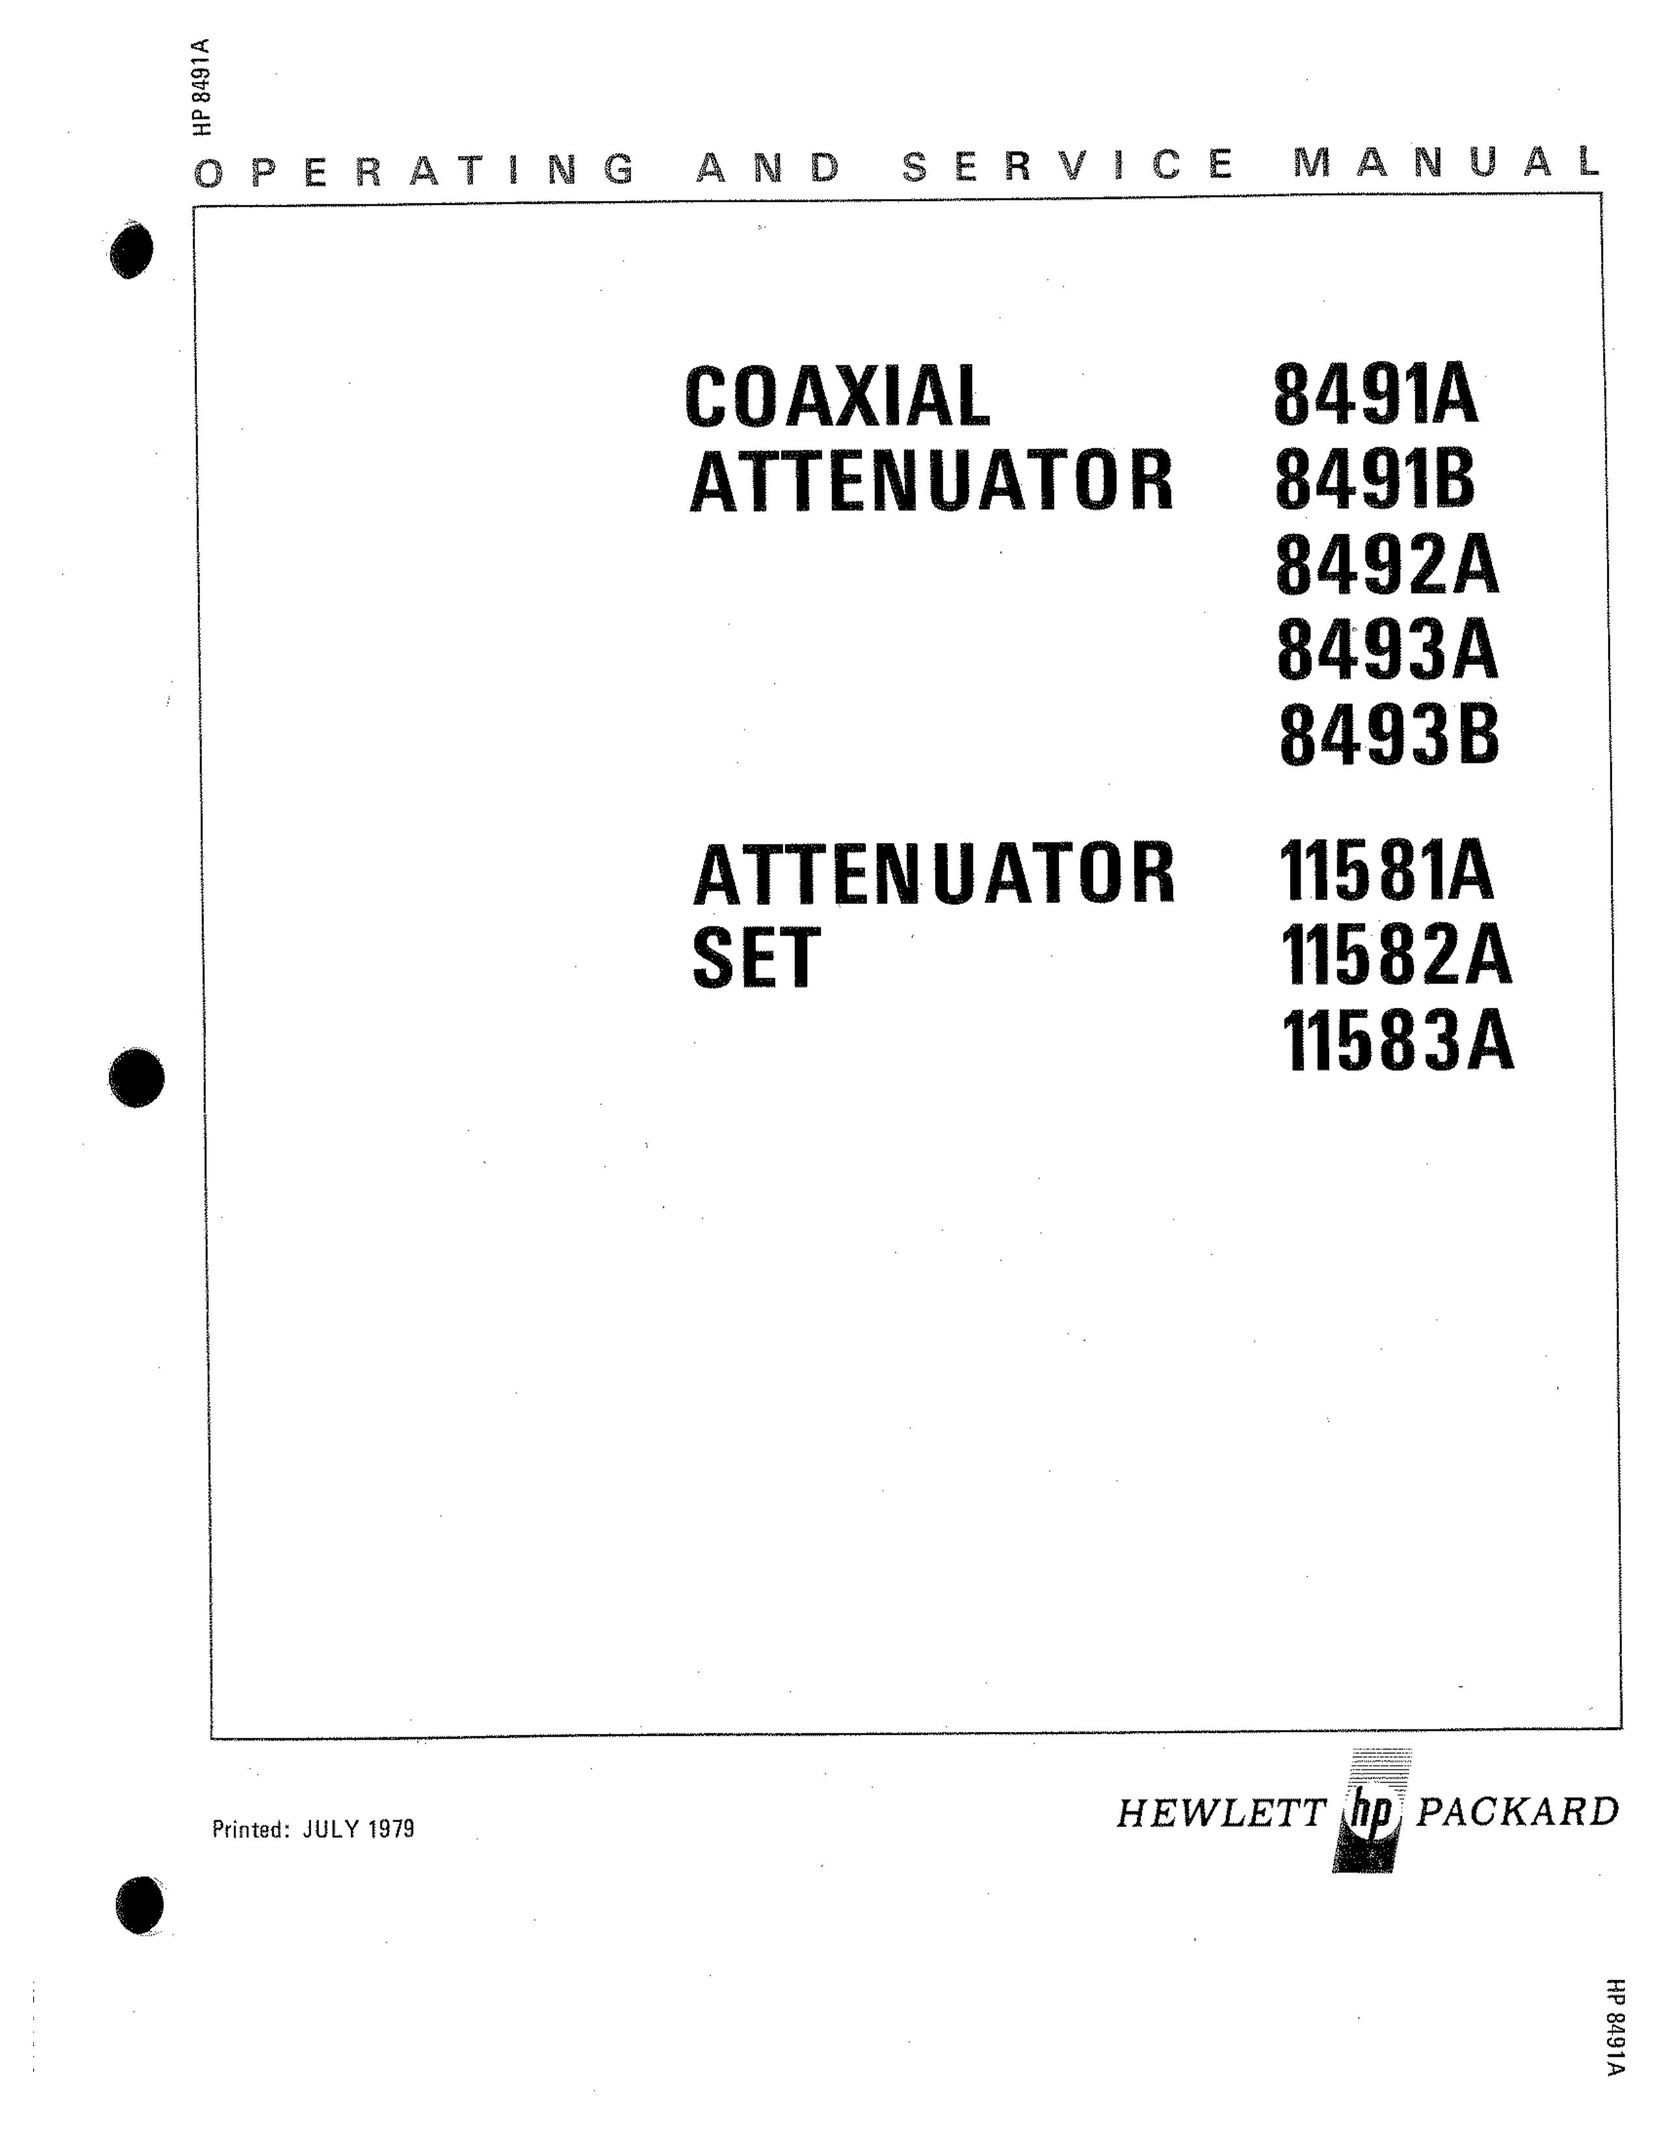 HP (Hewlett-Packard) 8492A TV Cables User Manual